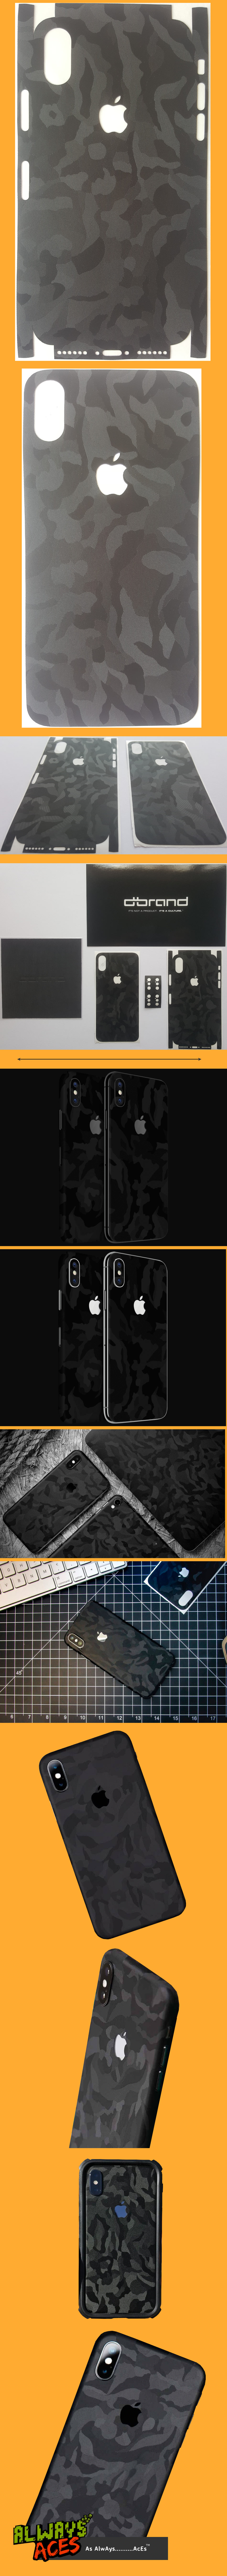 dbrand black camo skin apple iphone x 10 i-phone sticker decal cutout glass local stock brand new iphonex iphone10